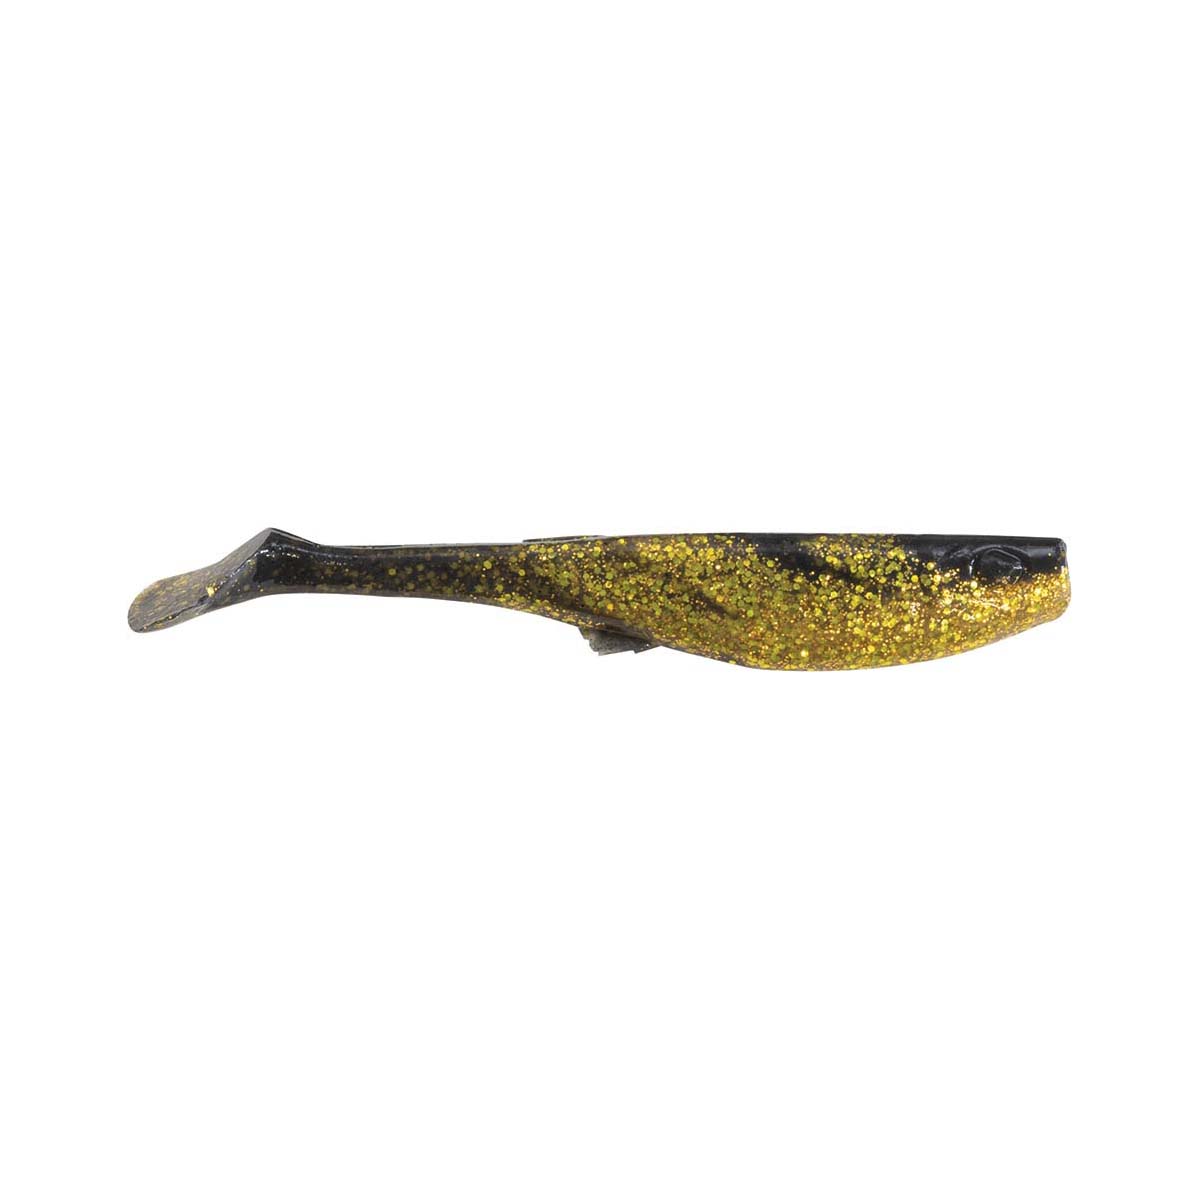 Berkley Gulp! Paddletail Shad Soft Plastic Lure 4in Black / Gold